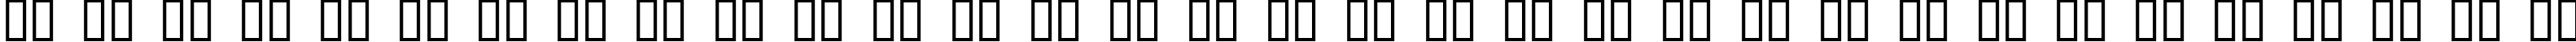 Пример написания русского алфавита шрифтом Heavy Texture